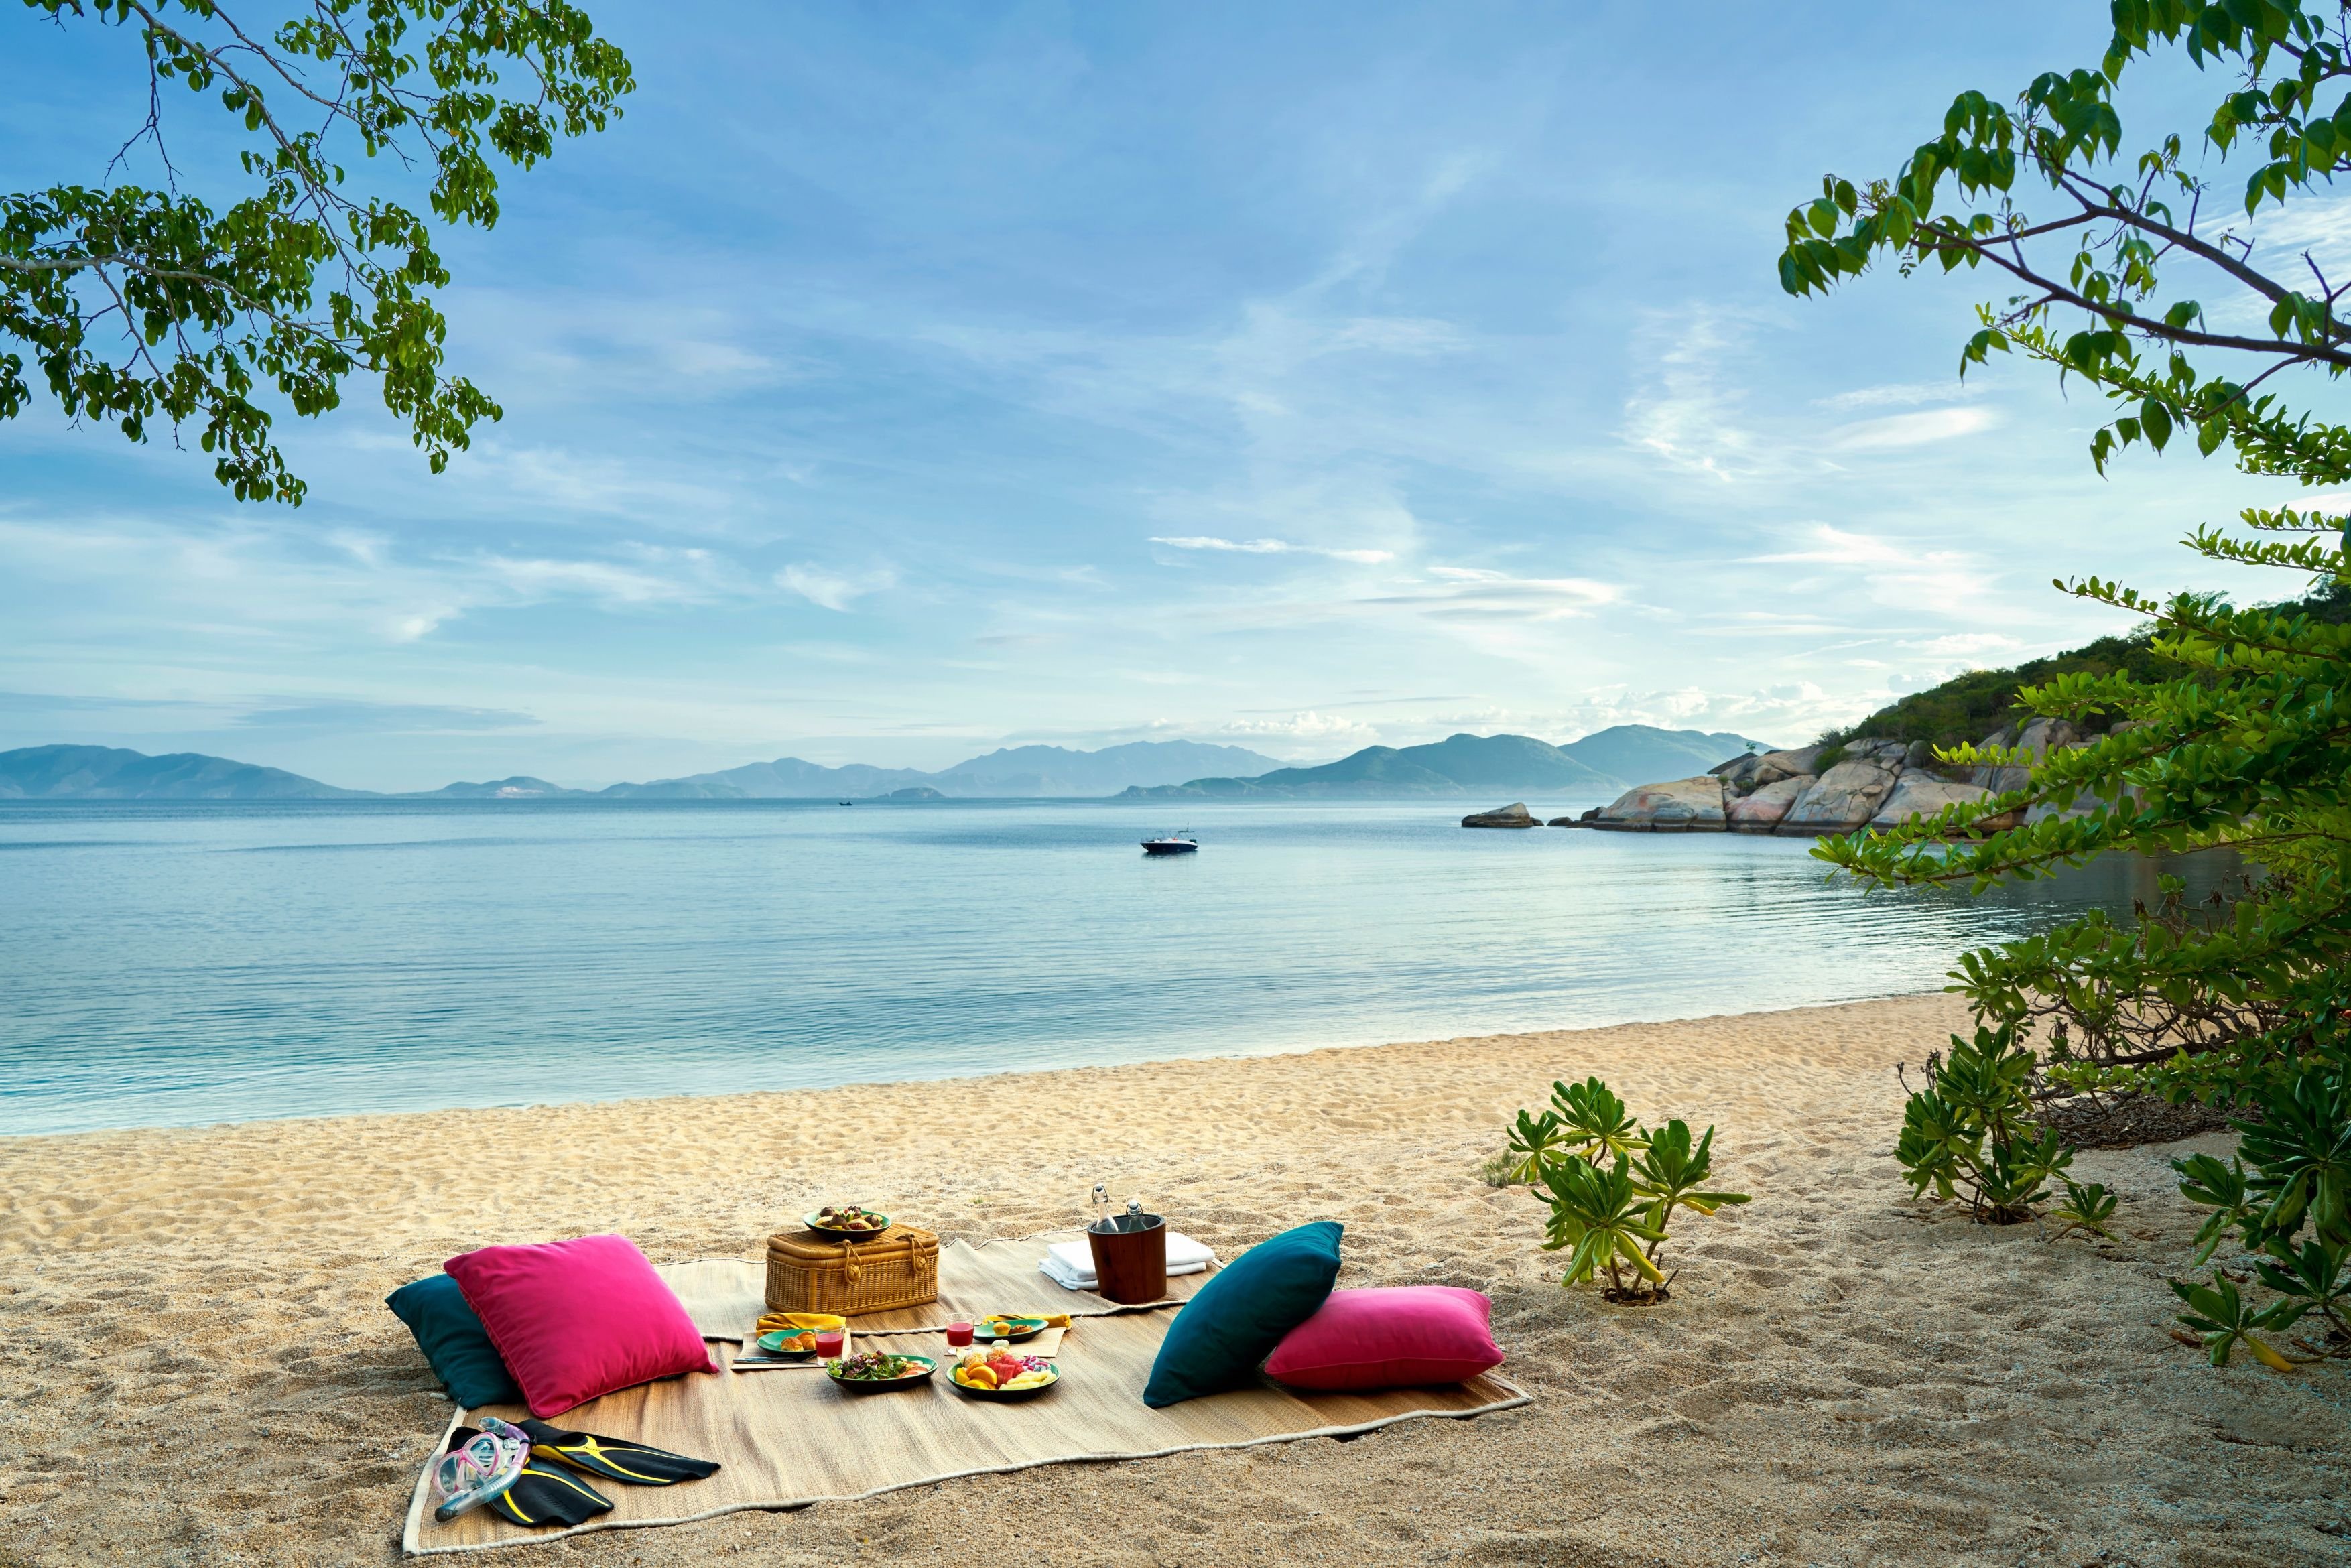 Photo of Six Senses Ninh Van Bay Beach with spacious bay